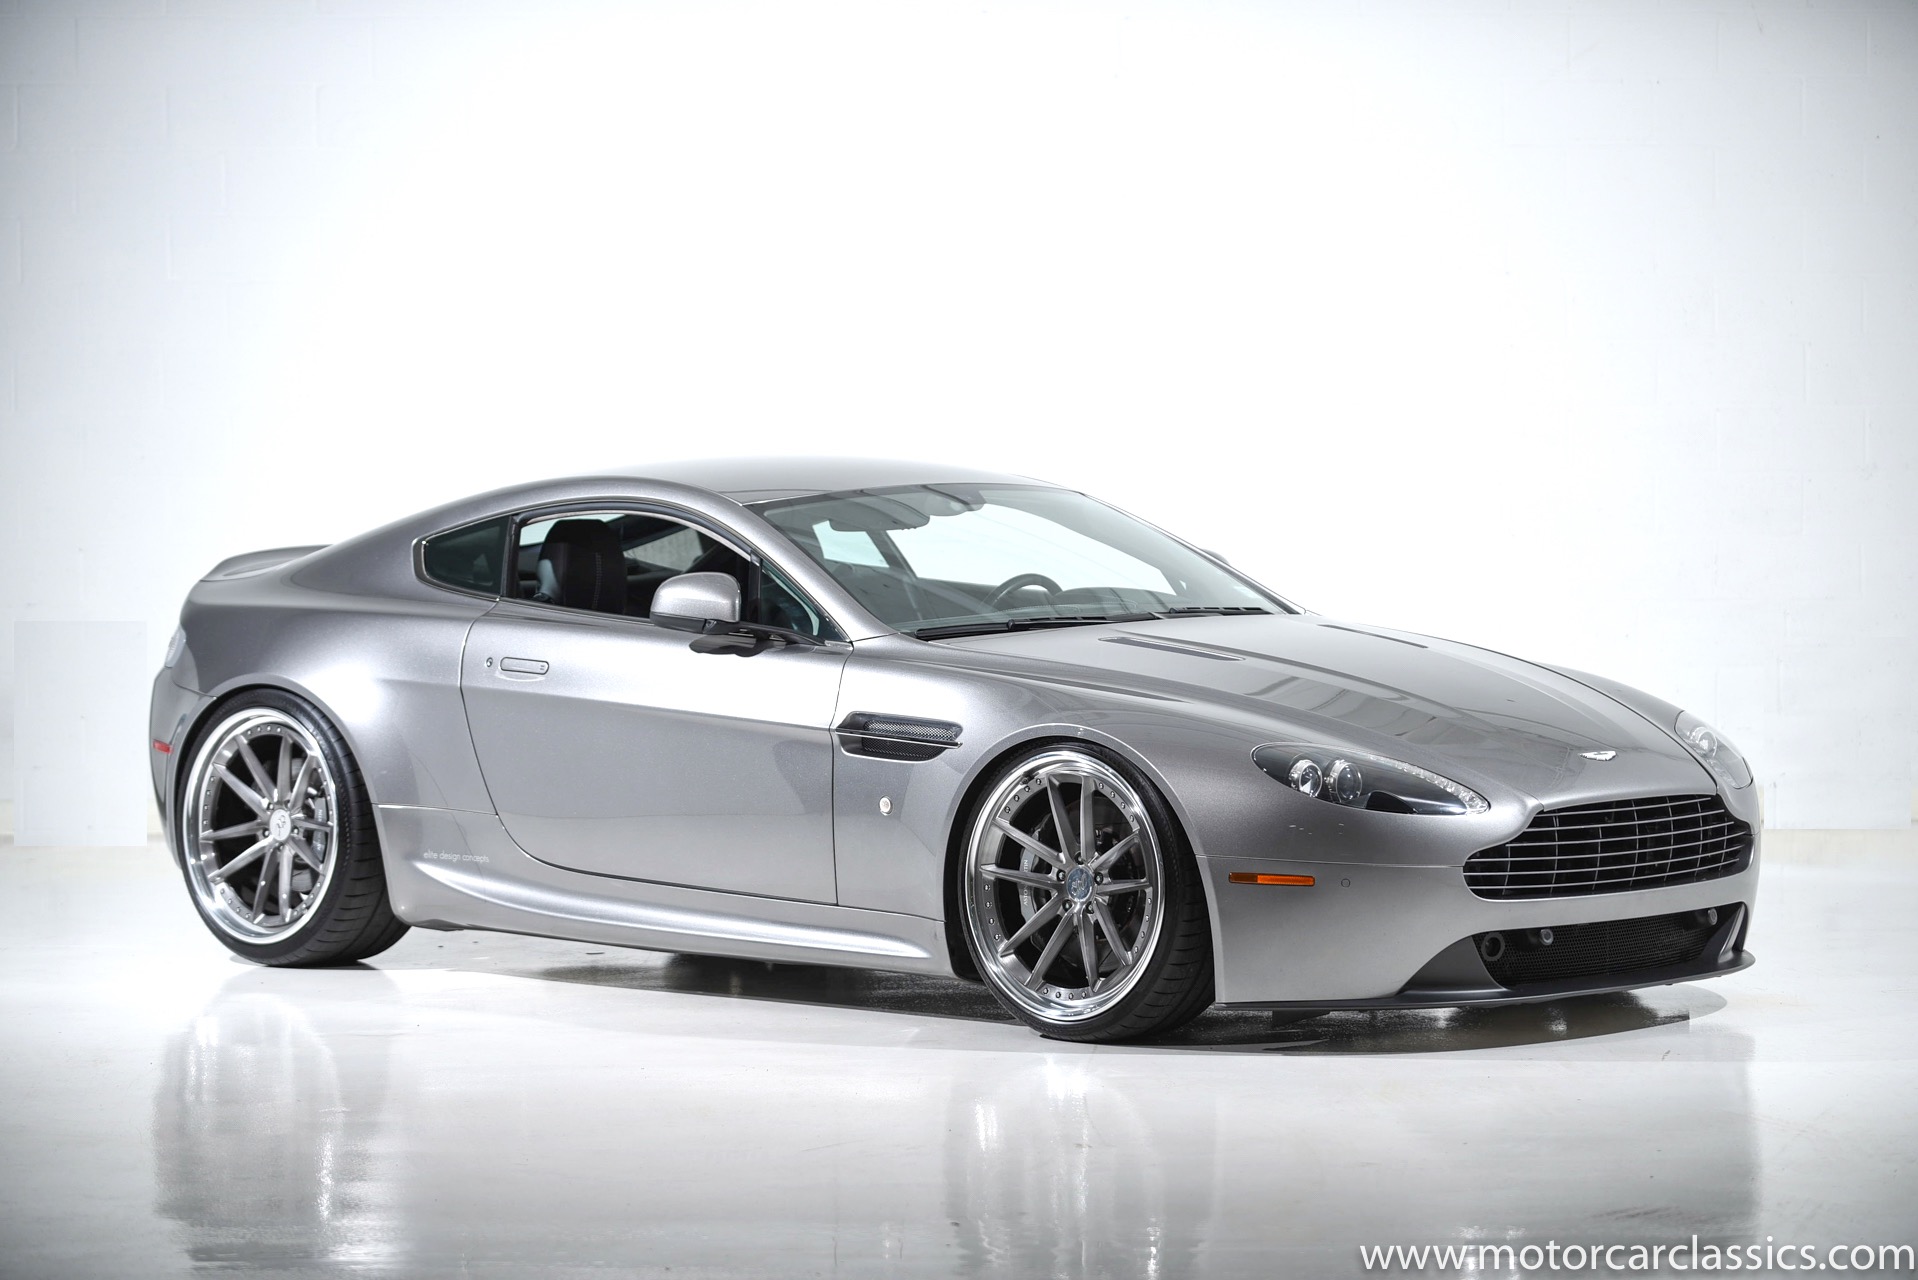 Used 2013 Aston Martin V8 Vantage For Sale ($64,500) | Motorcar Classics  Stock #1363